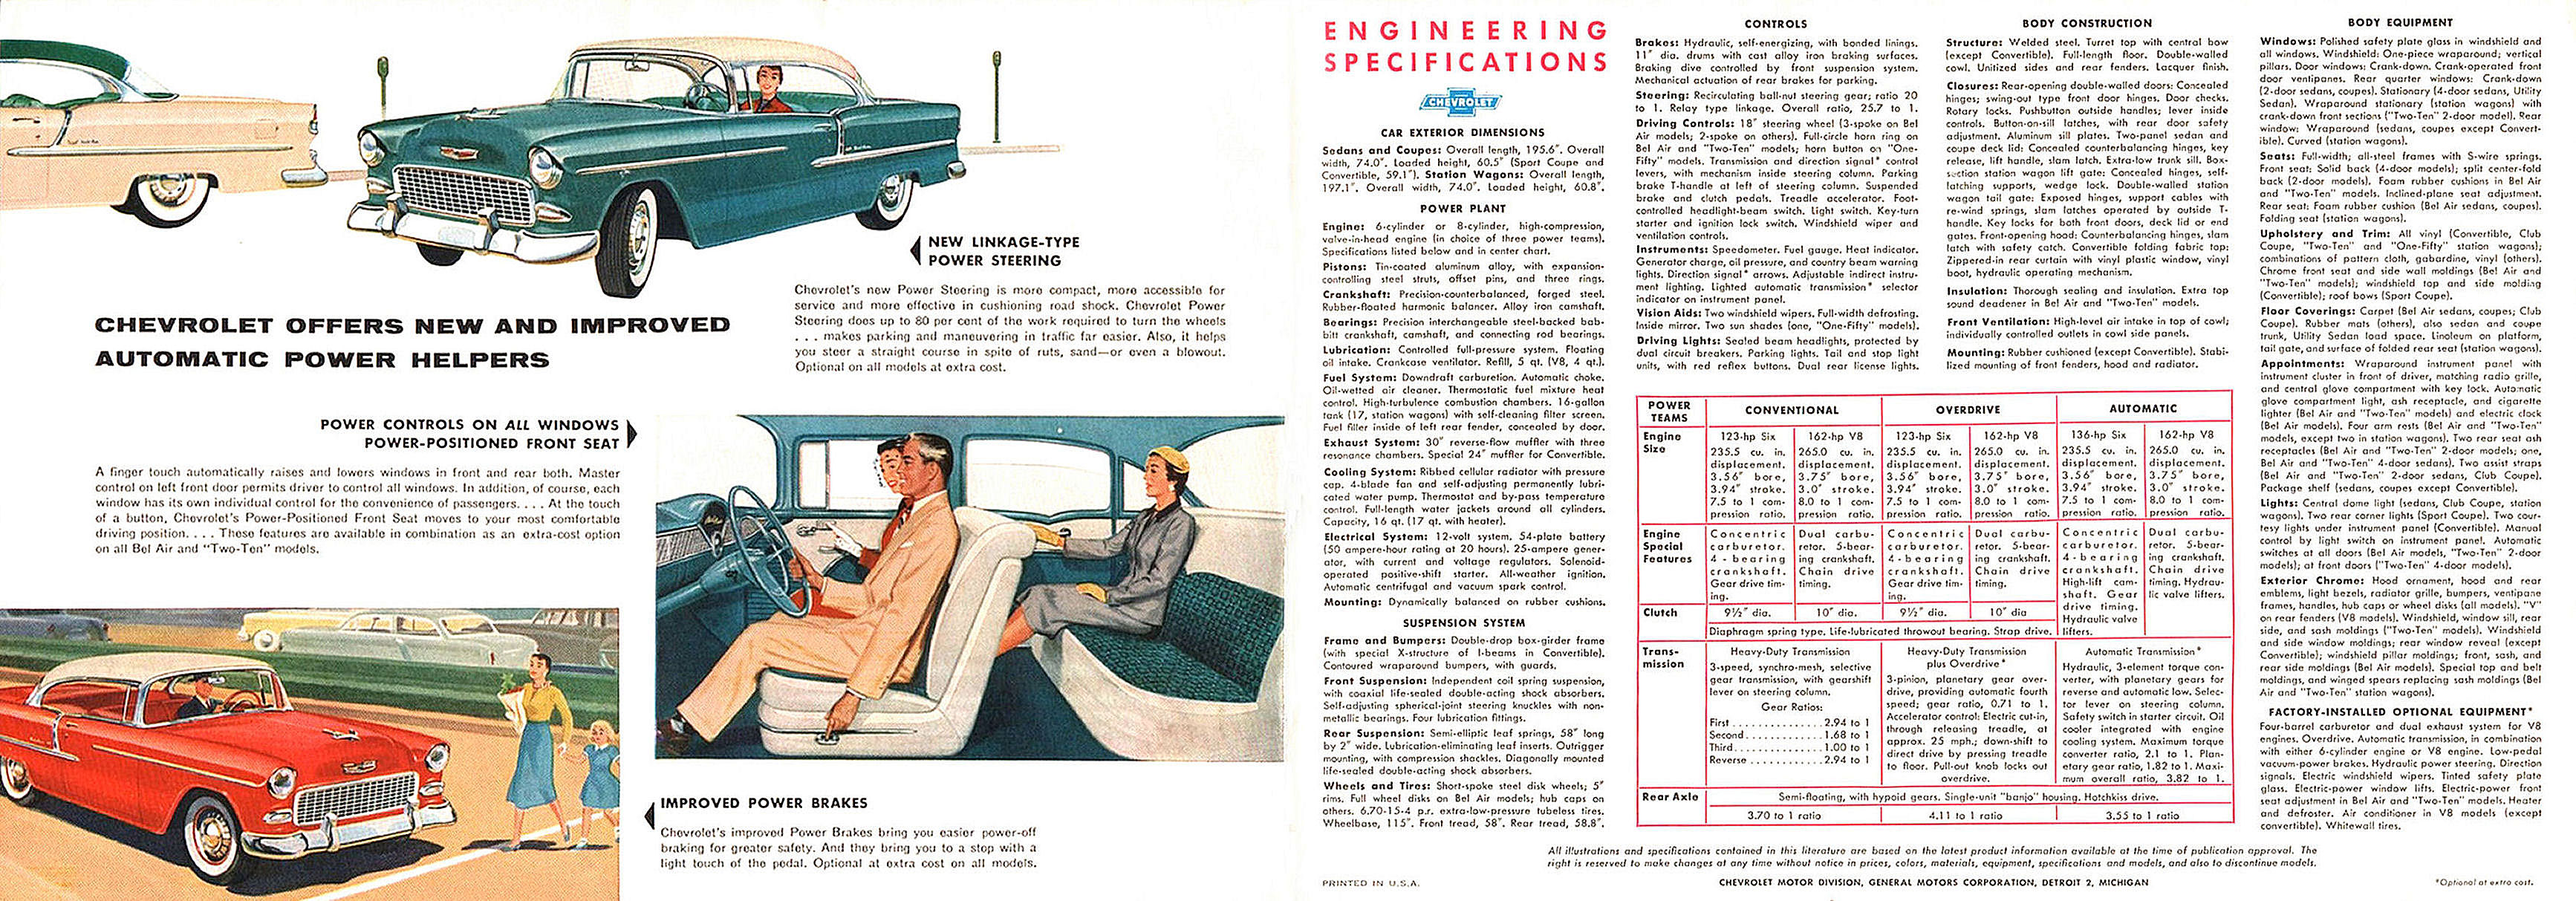 1955_Chevrolet_Full_Line_y-18-19